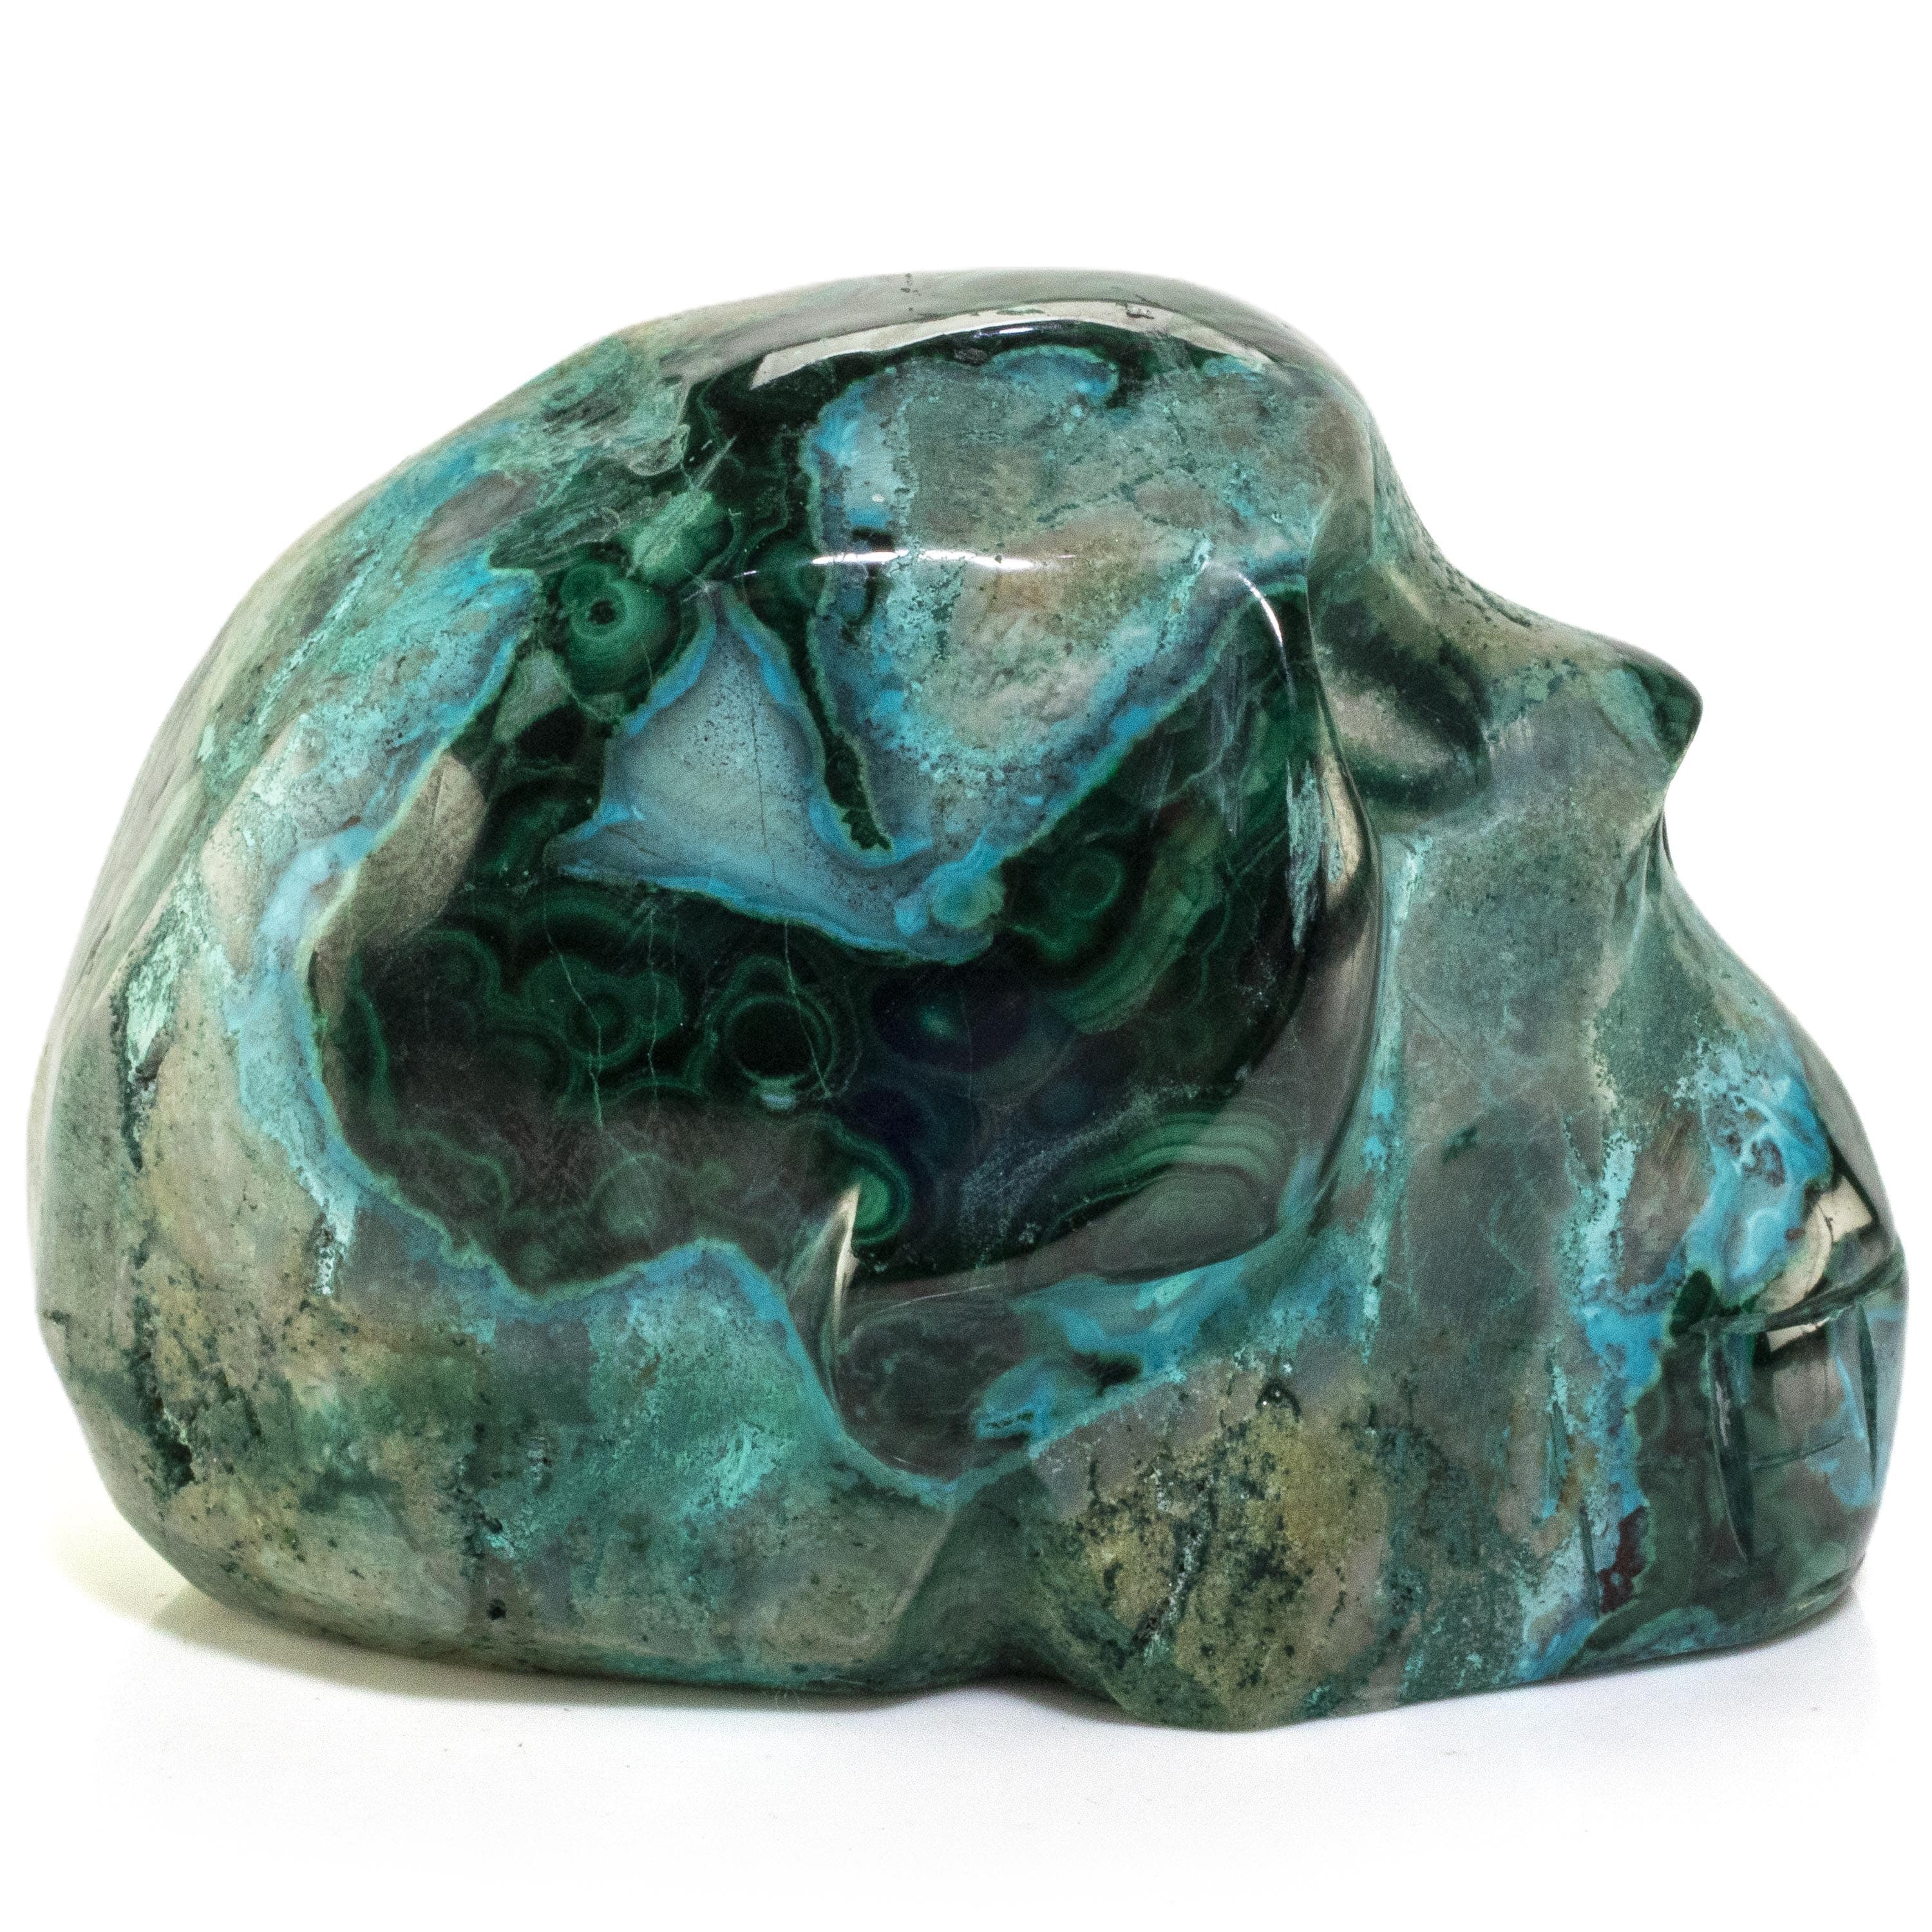 Kalifano Malachite Chrysocolla Skull Carving 3" / 219g SK1000-CRY.001